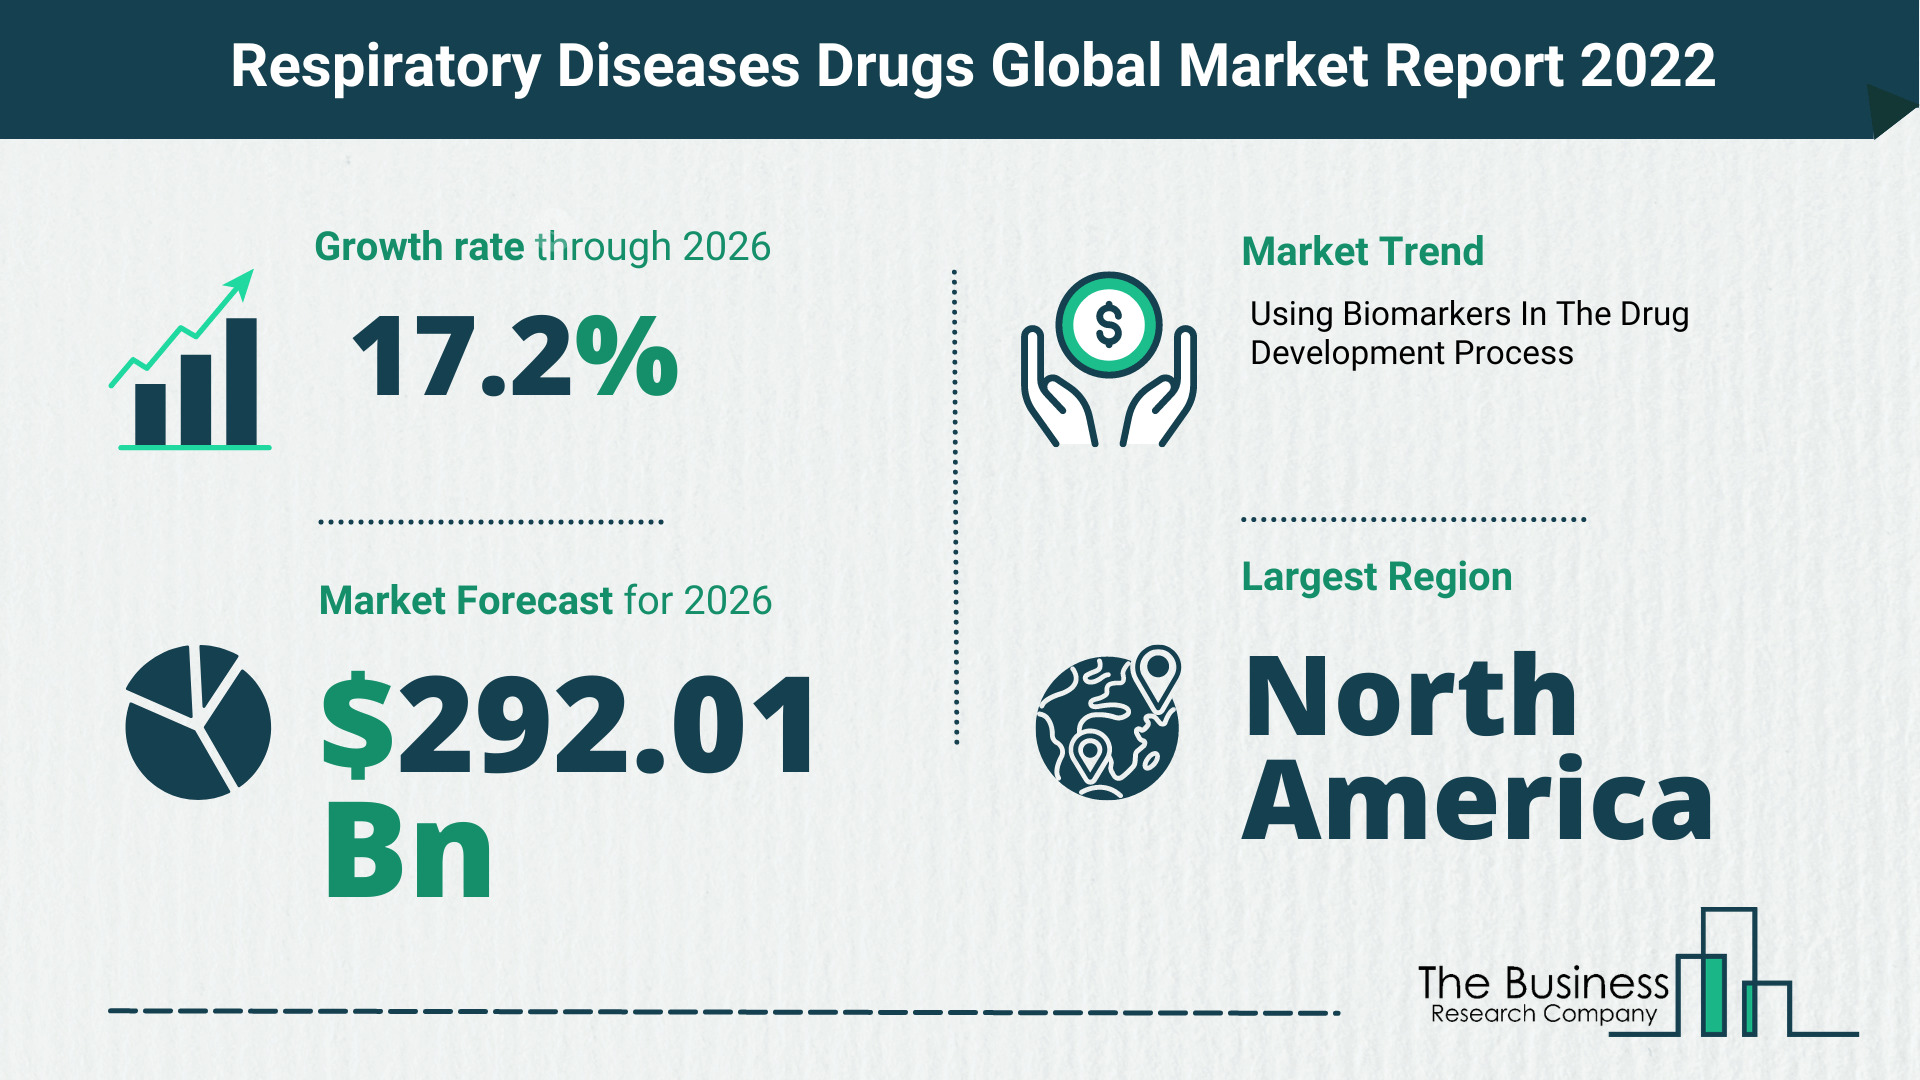 Global Respiratory Diseases Drugs Market